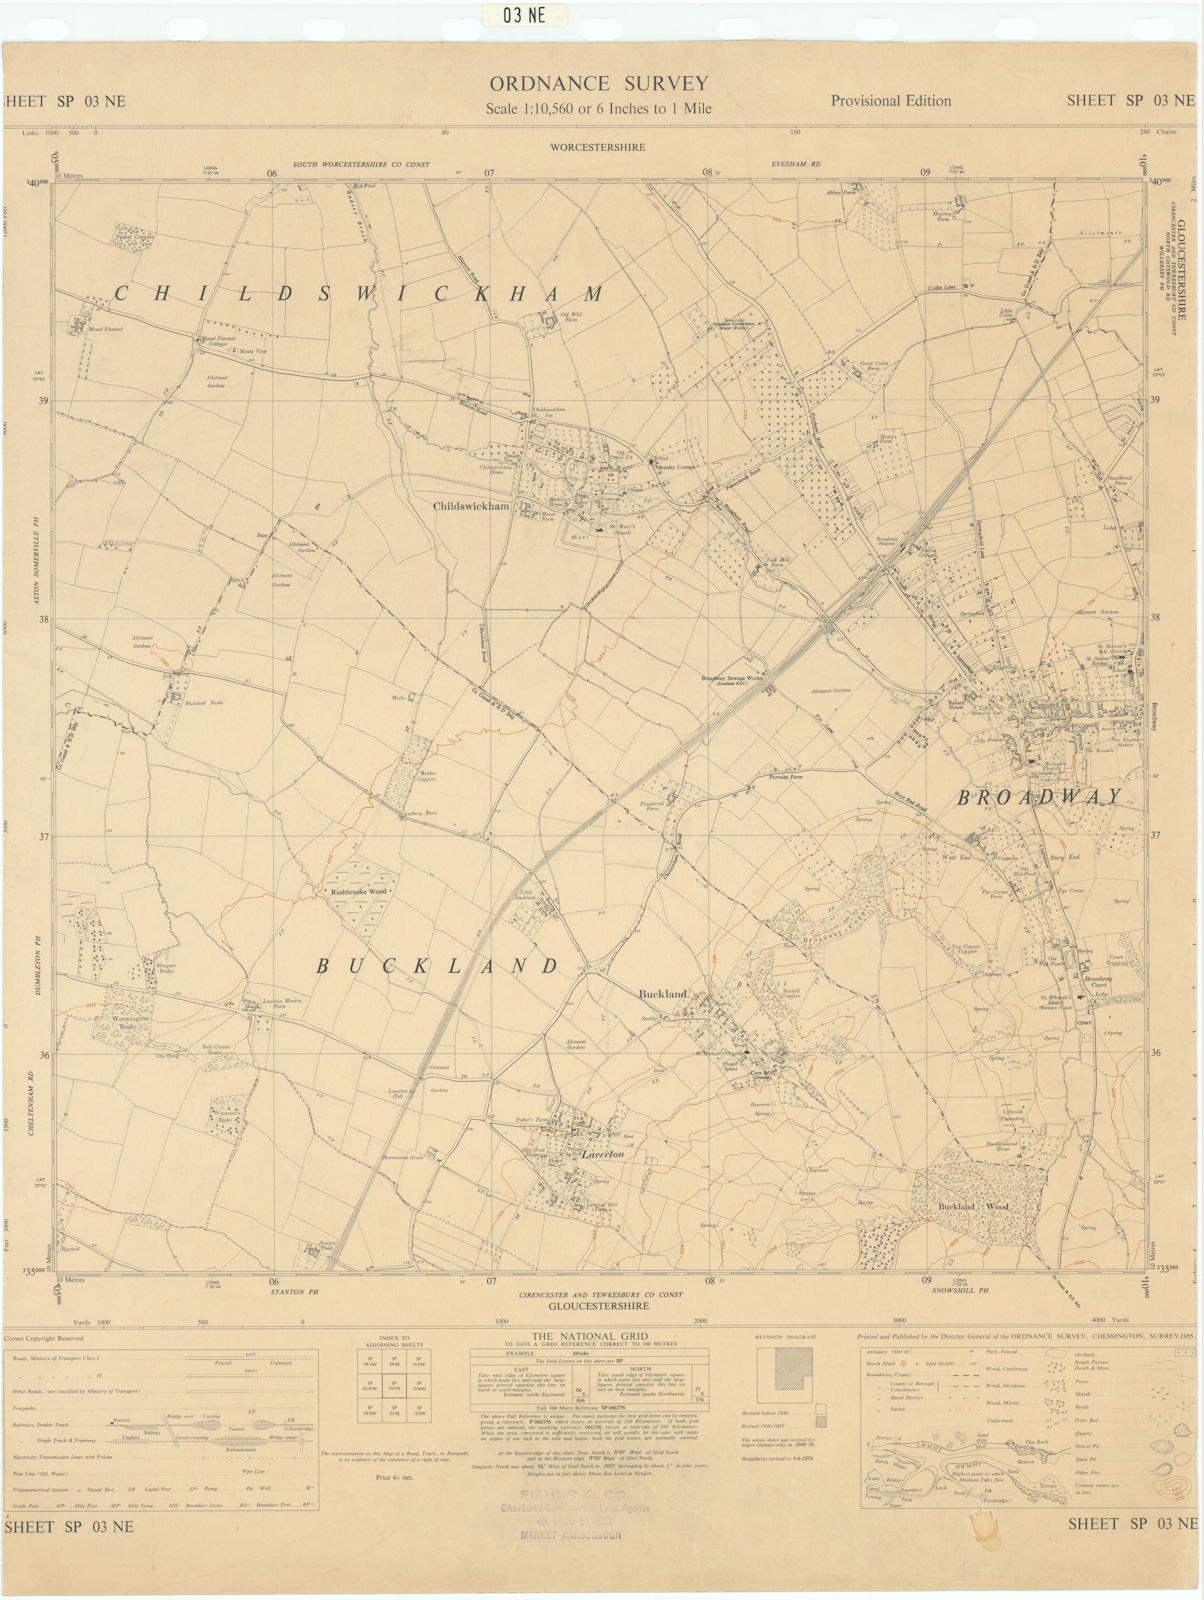 Ordnance Survey SP03NE Cotswolds Broadway Childswickham Buckland 1955 map